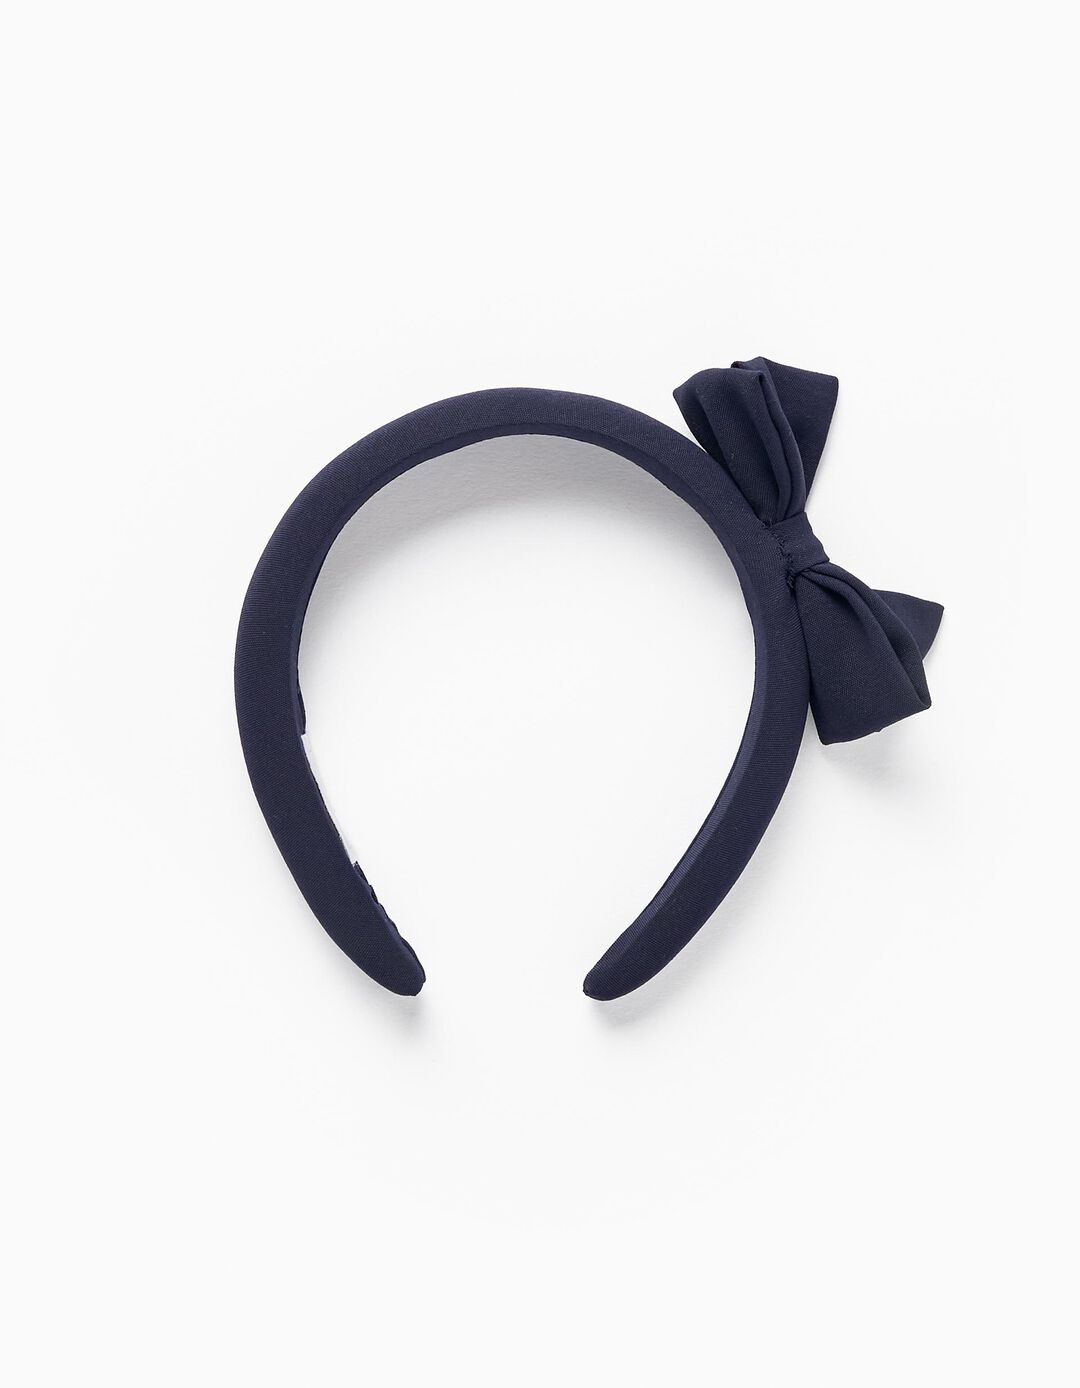 Fabric Headband with Bow for Girls, Dark Blue